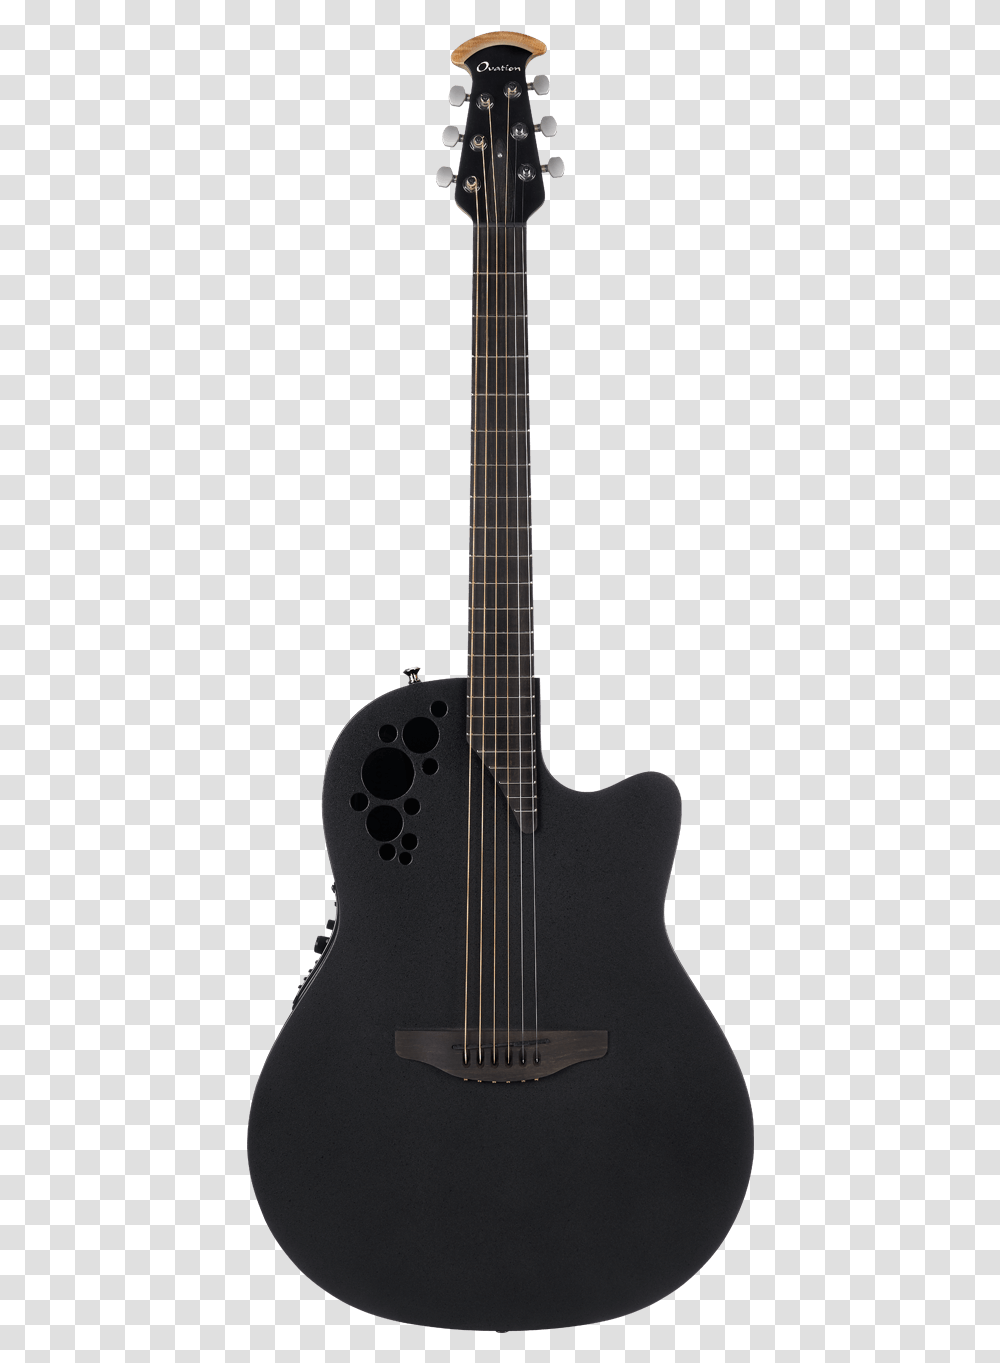 American Lx Limited Black Guitar, Leisure Activities, Musical Instrument, Bass Guitar, Electric Guitar Transparent Png